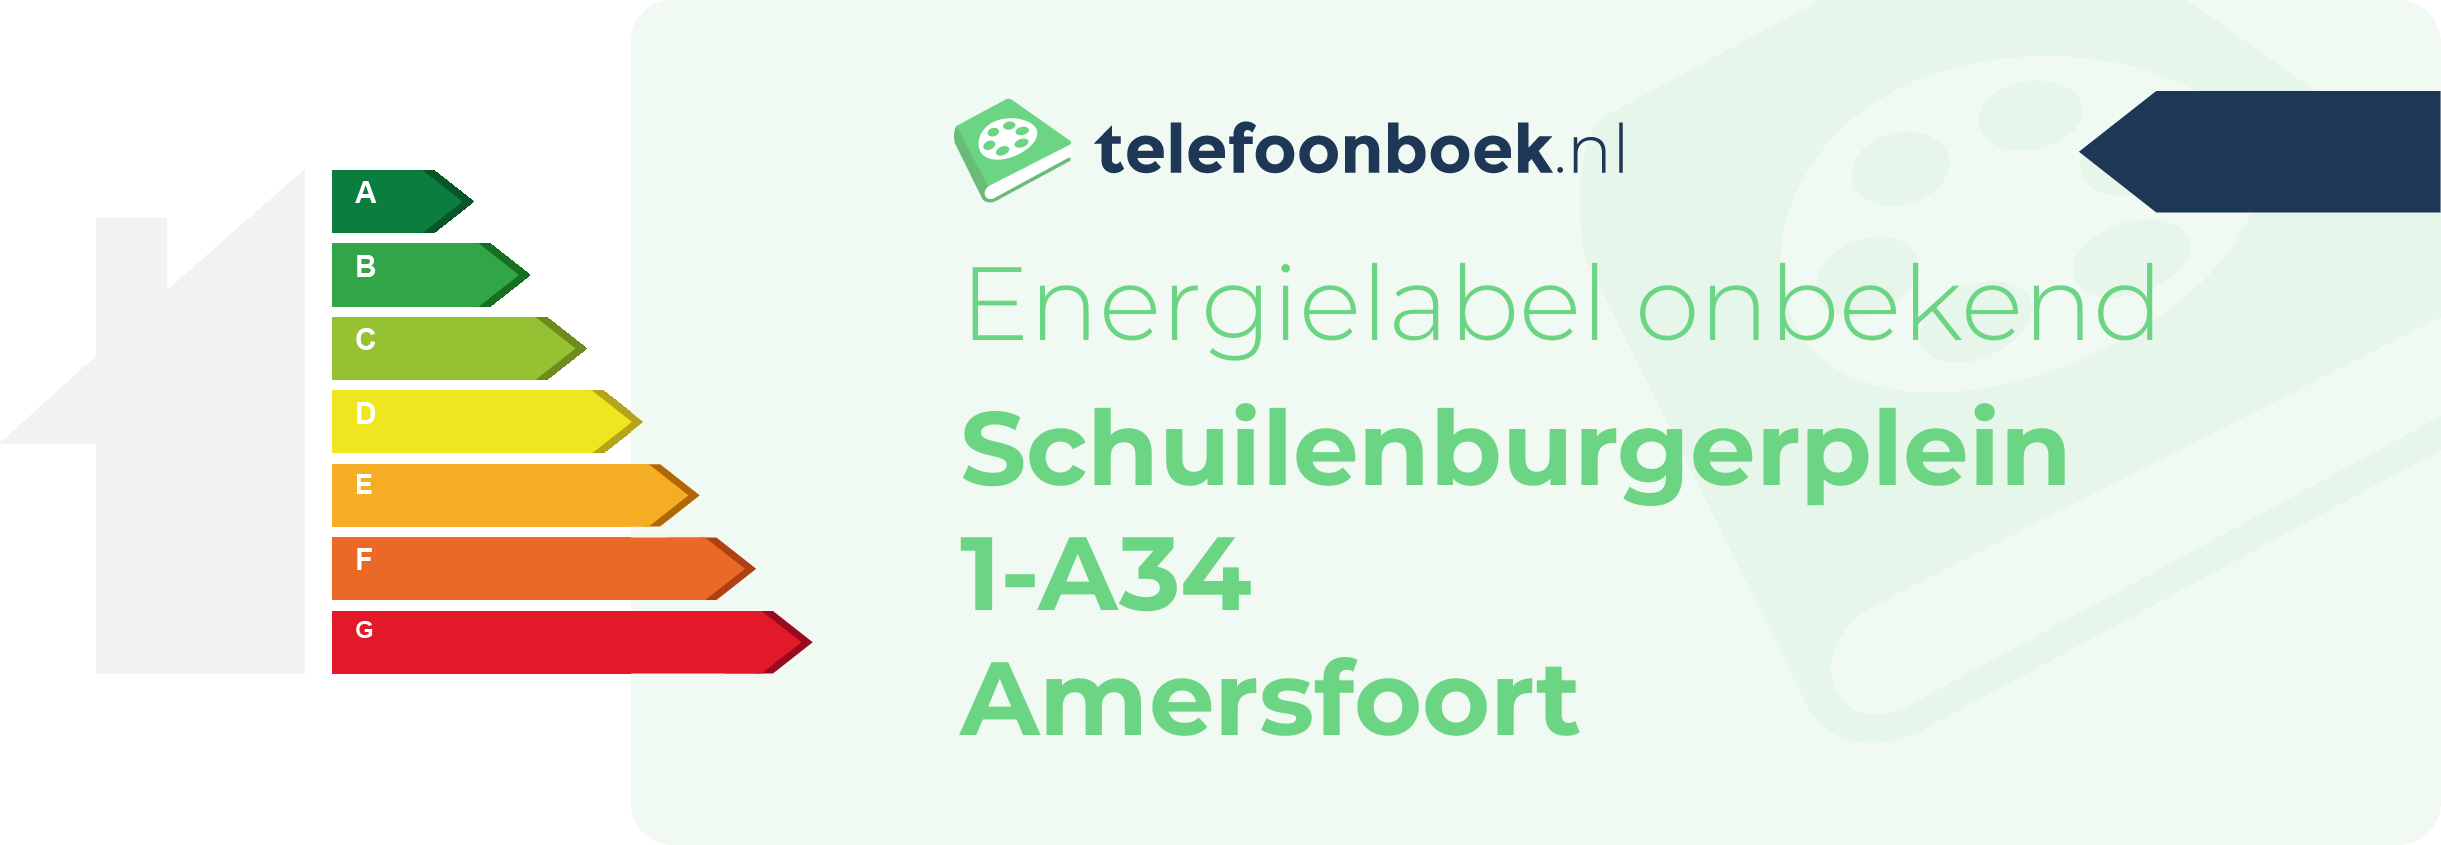 Energielabel Schuilenburgerplein 1-A34 Amersfoort